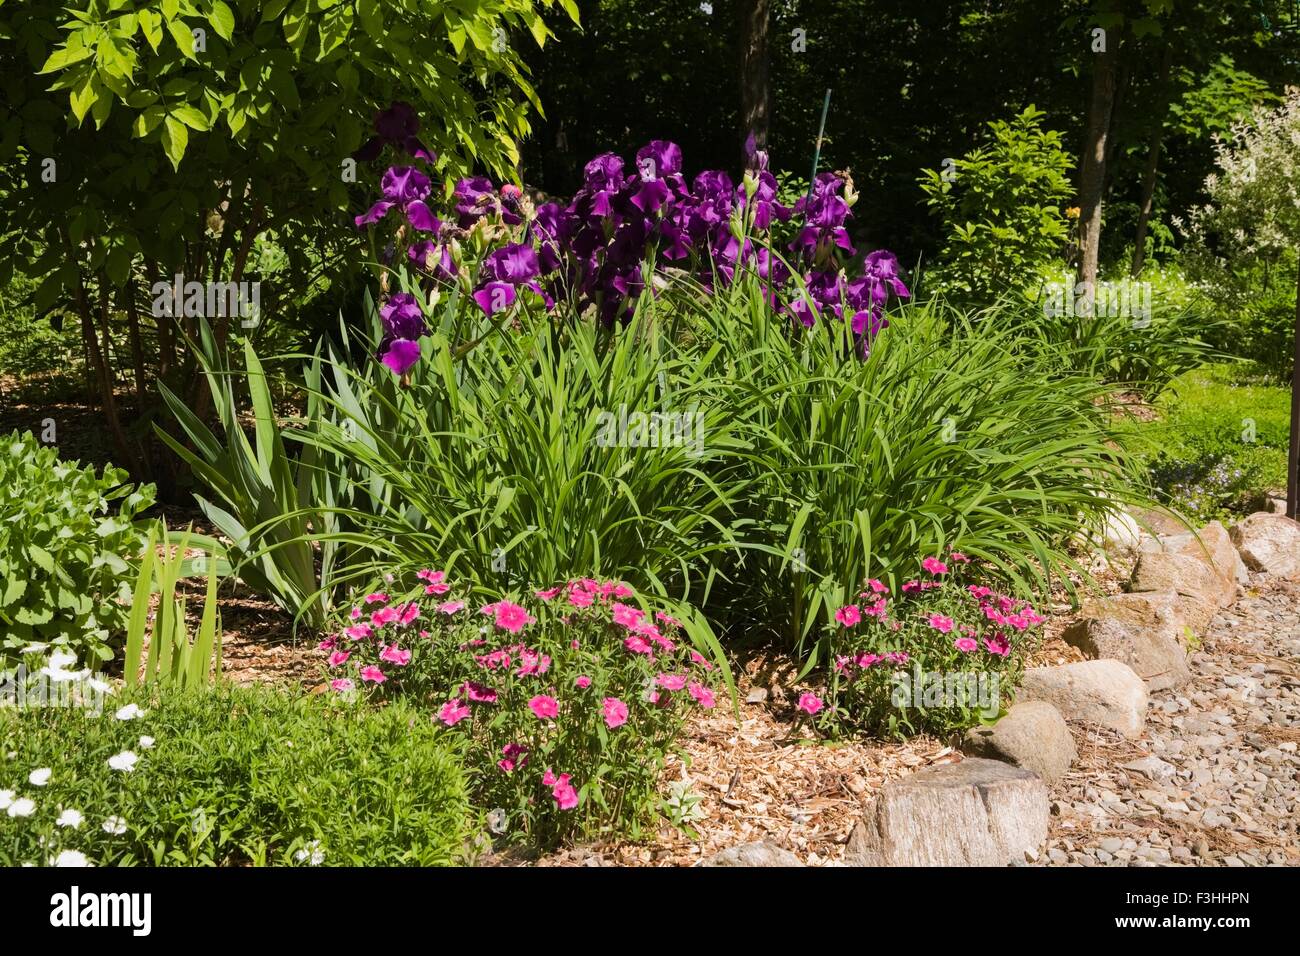 Bordered with rocks and purple Iris flowers in backyard garden in spring season Stock Photo